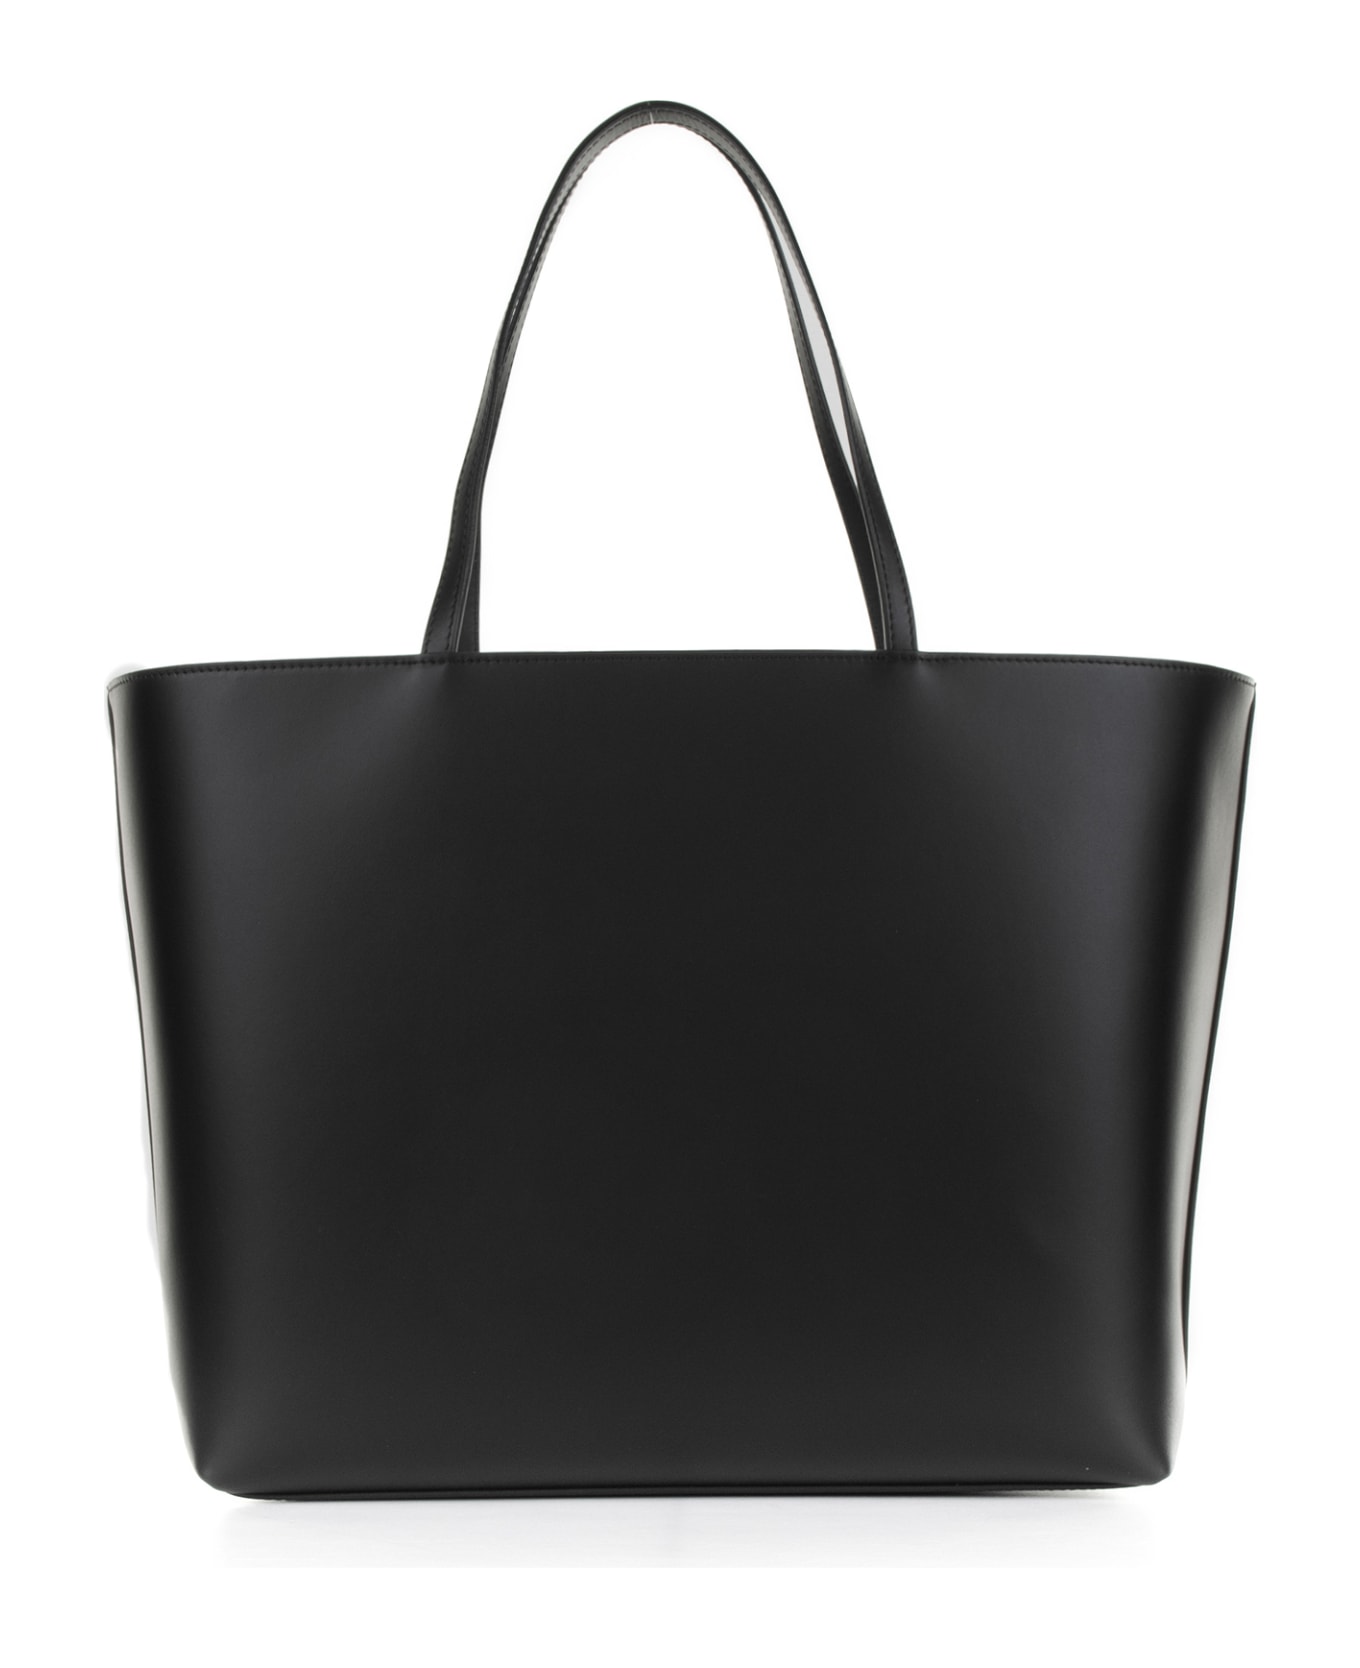 Dolce & Gabbana Medium Black Leather Shopping Bag - BLACK